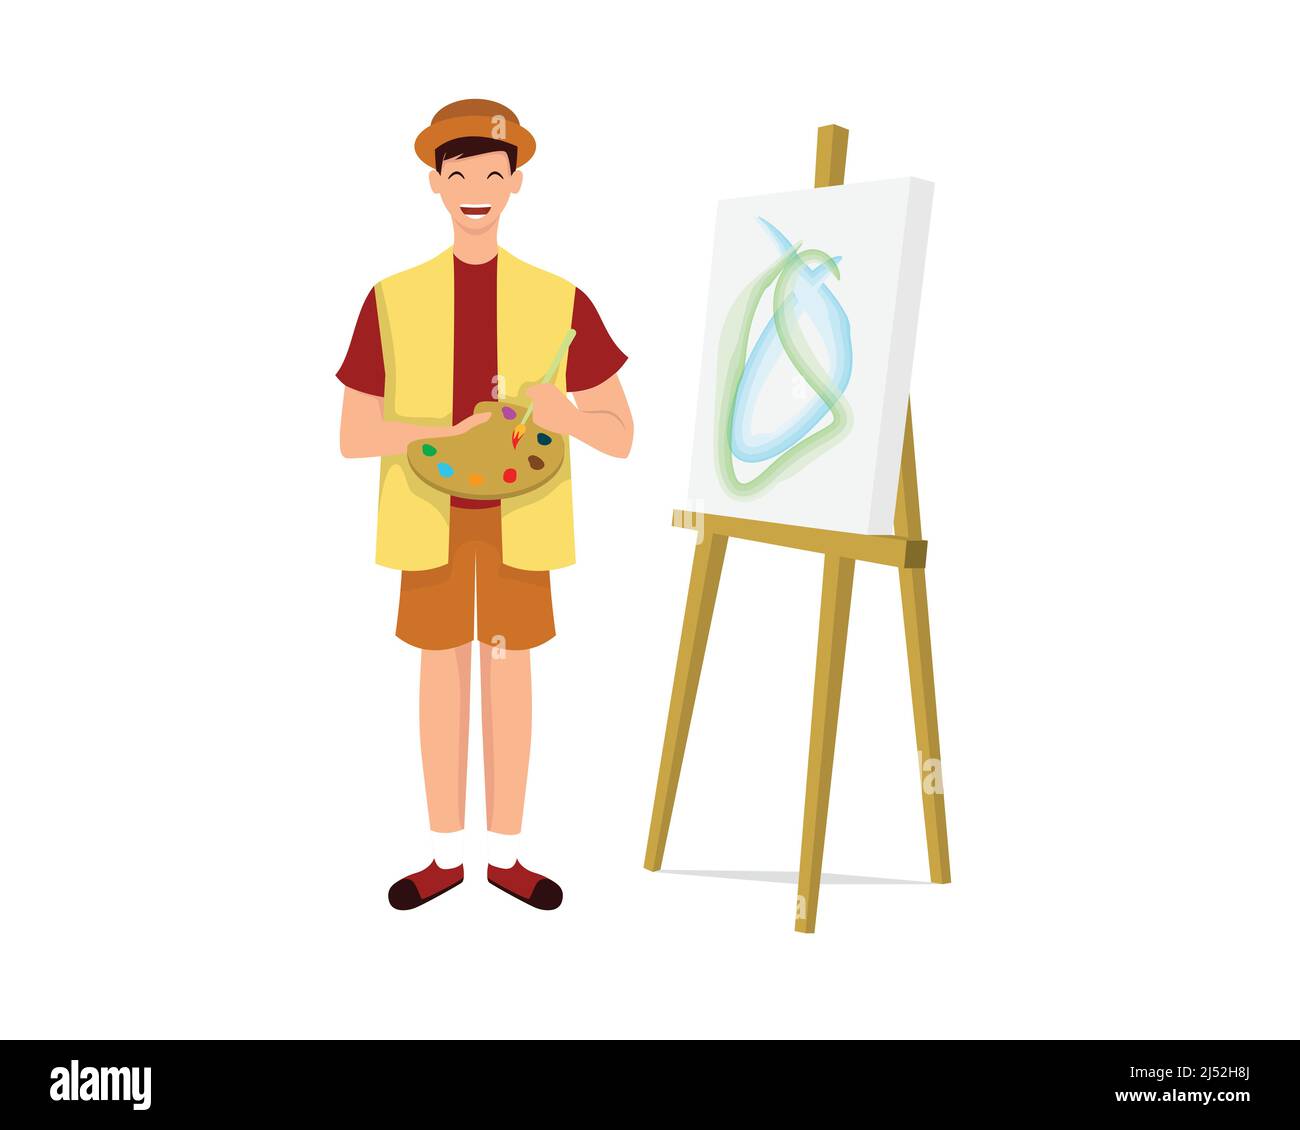 Man Painter with Painting Gesture Illustration Vector Illustrazione Vettoriale